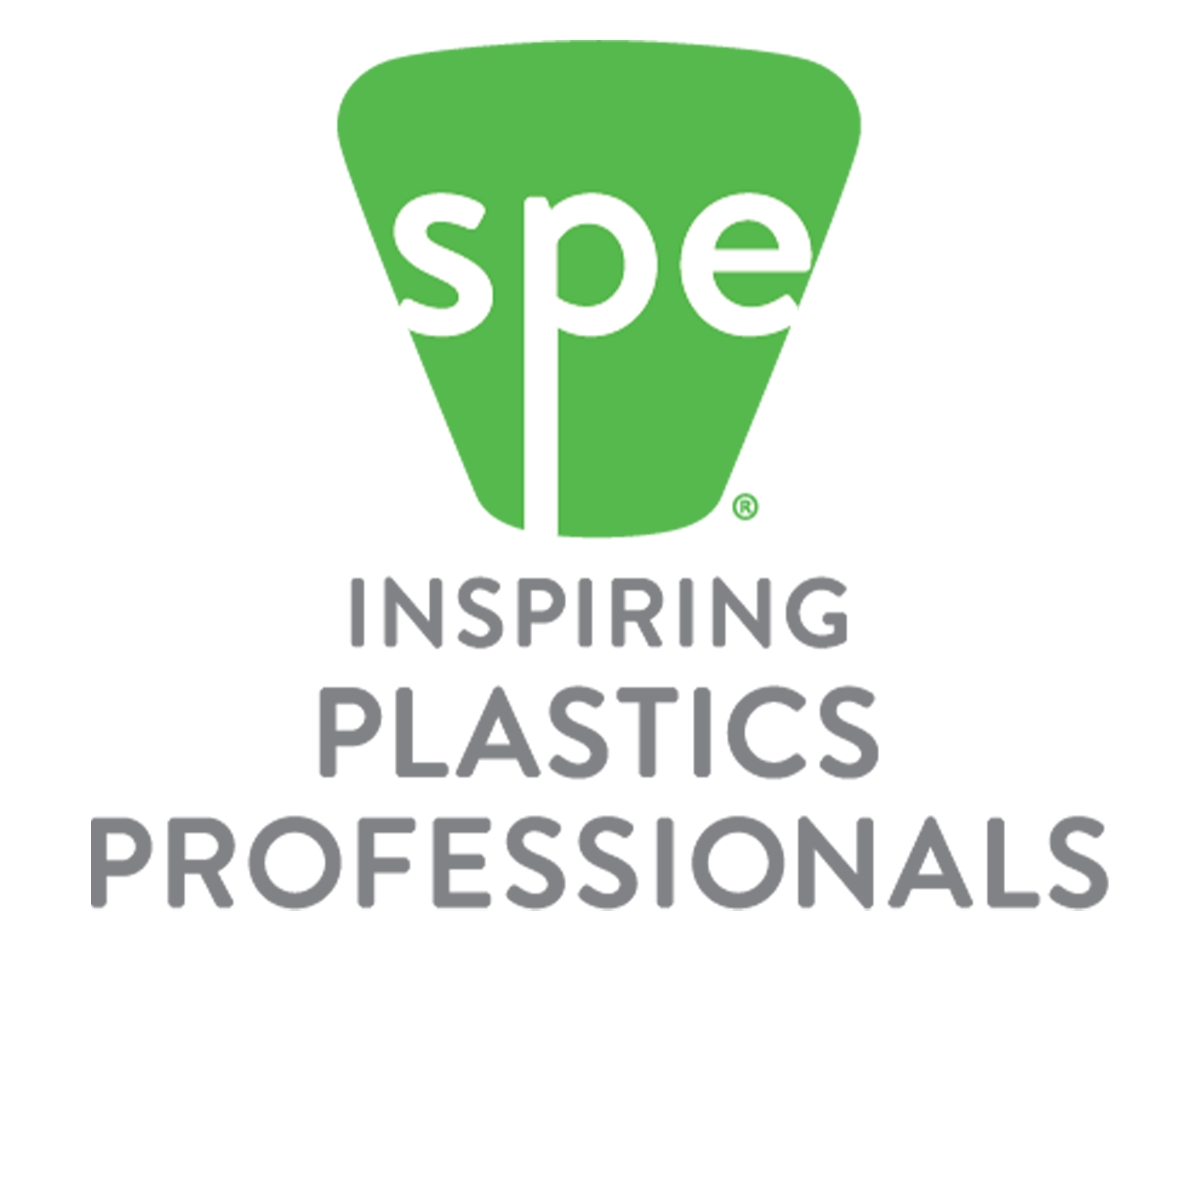 Society of Plastic Engineers (SPE)